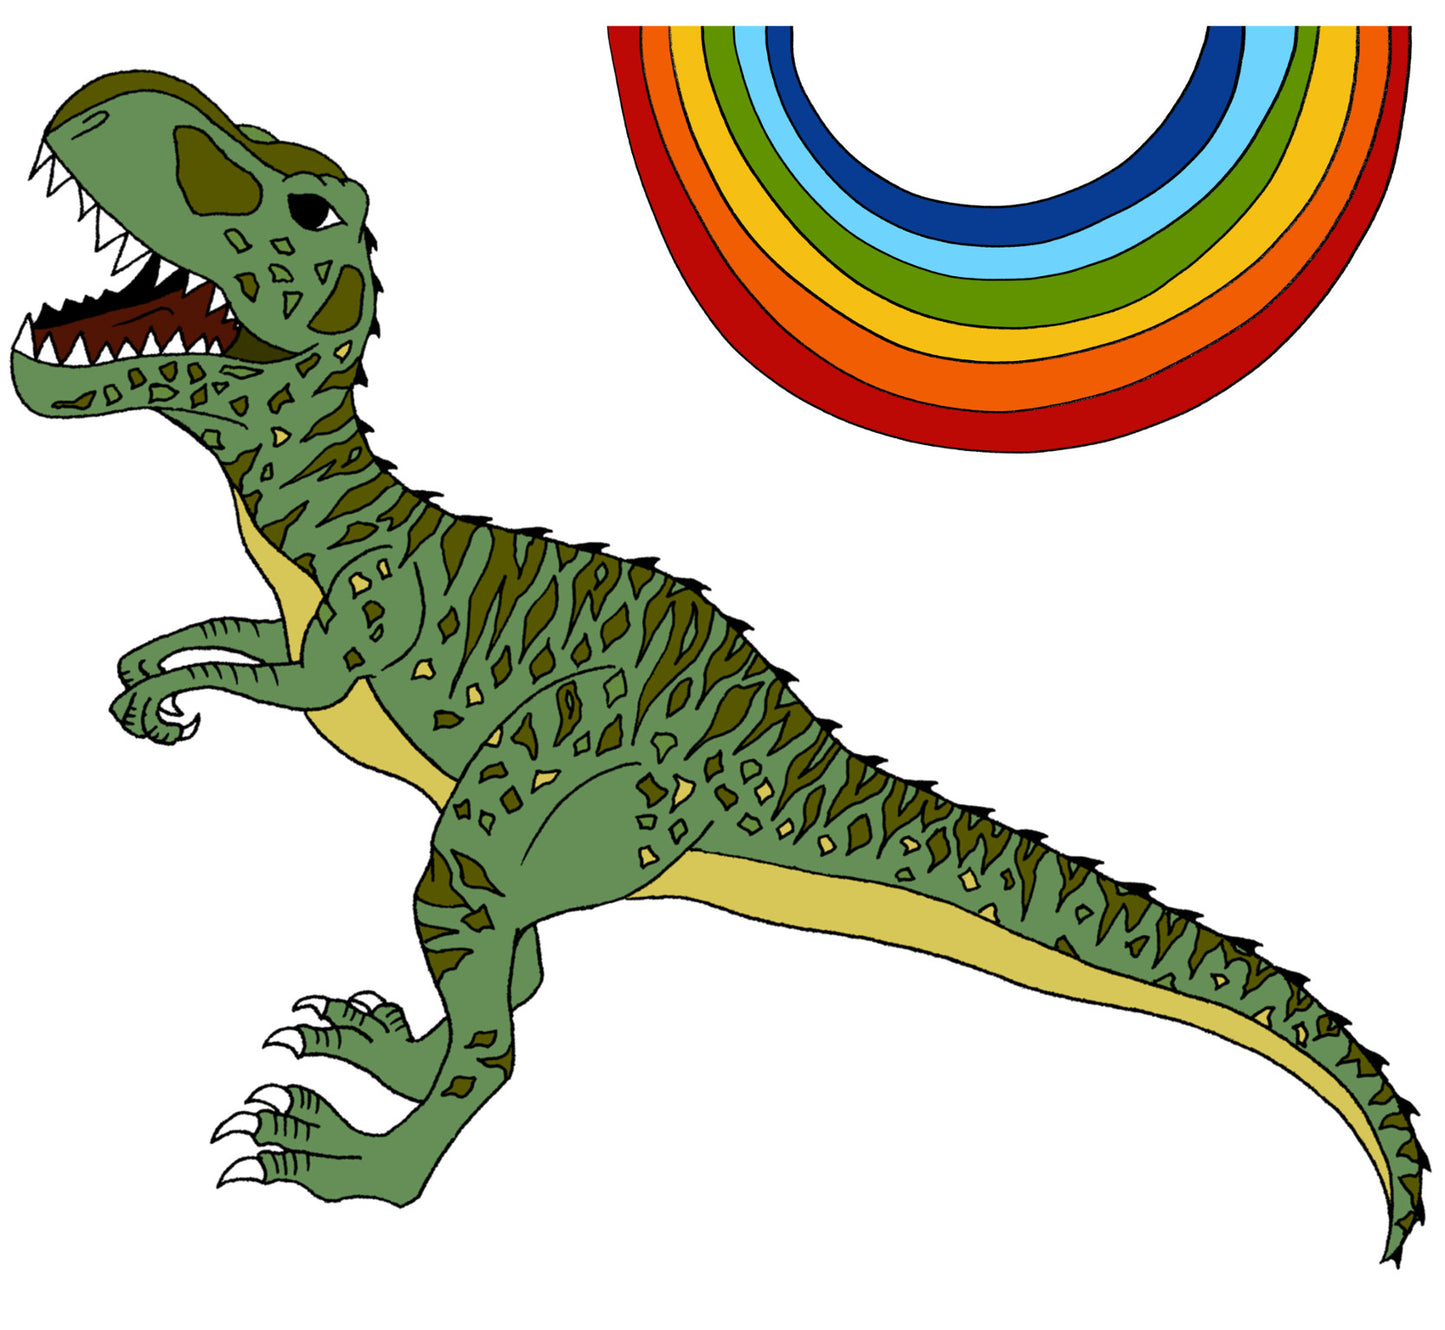 Decals - Single Dinosaur + Rainbow